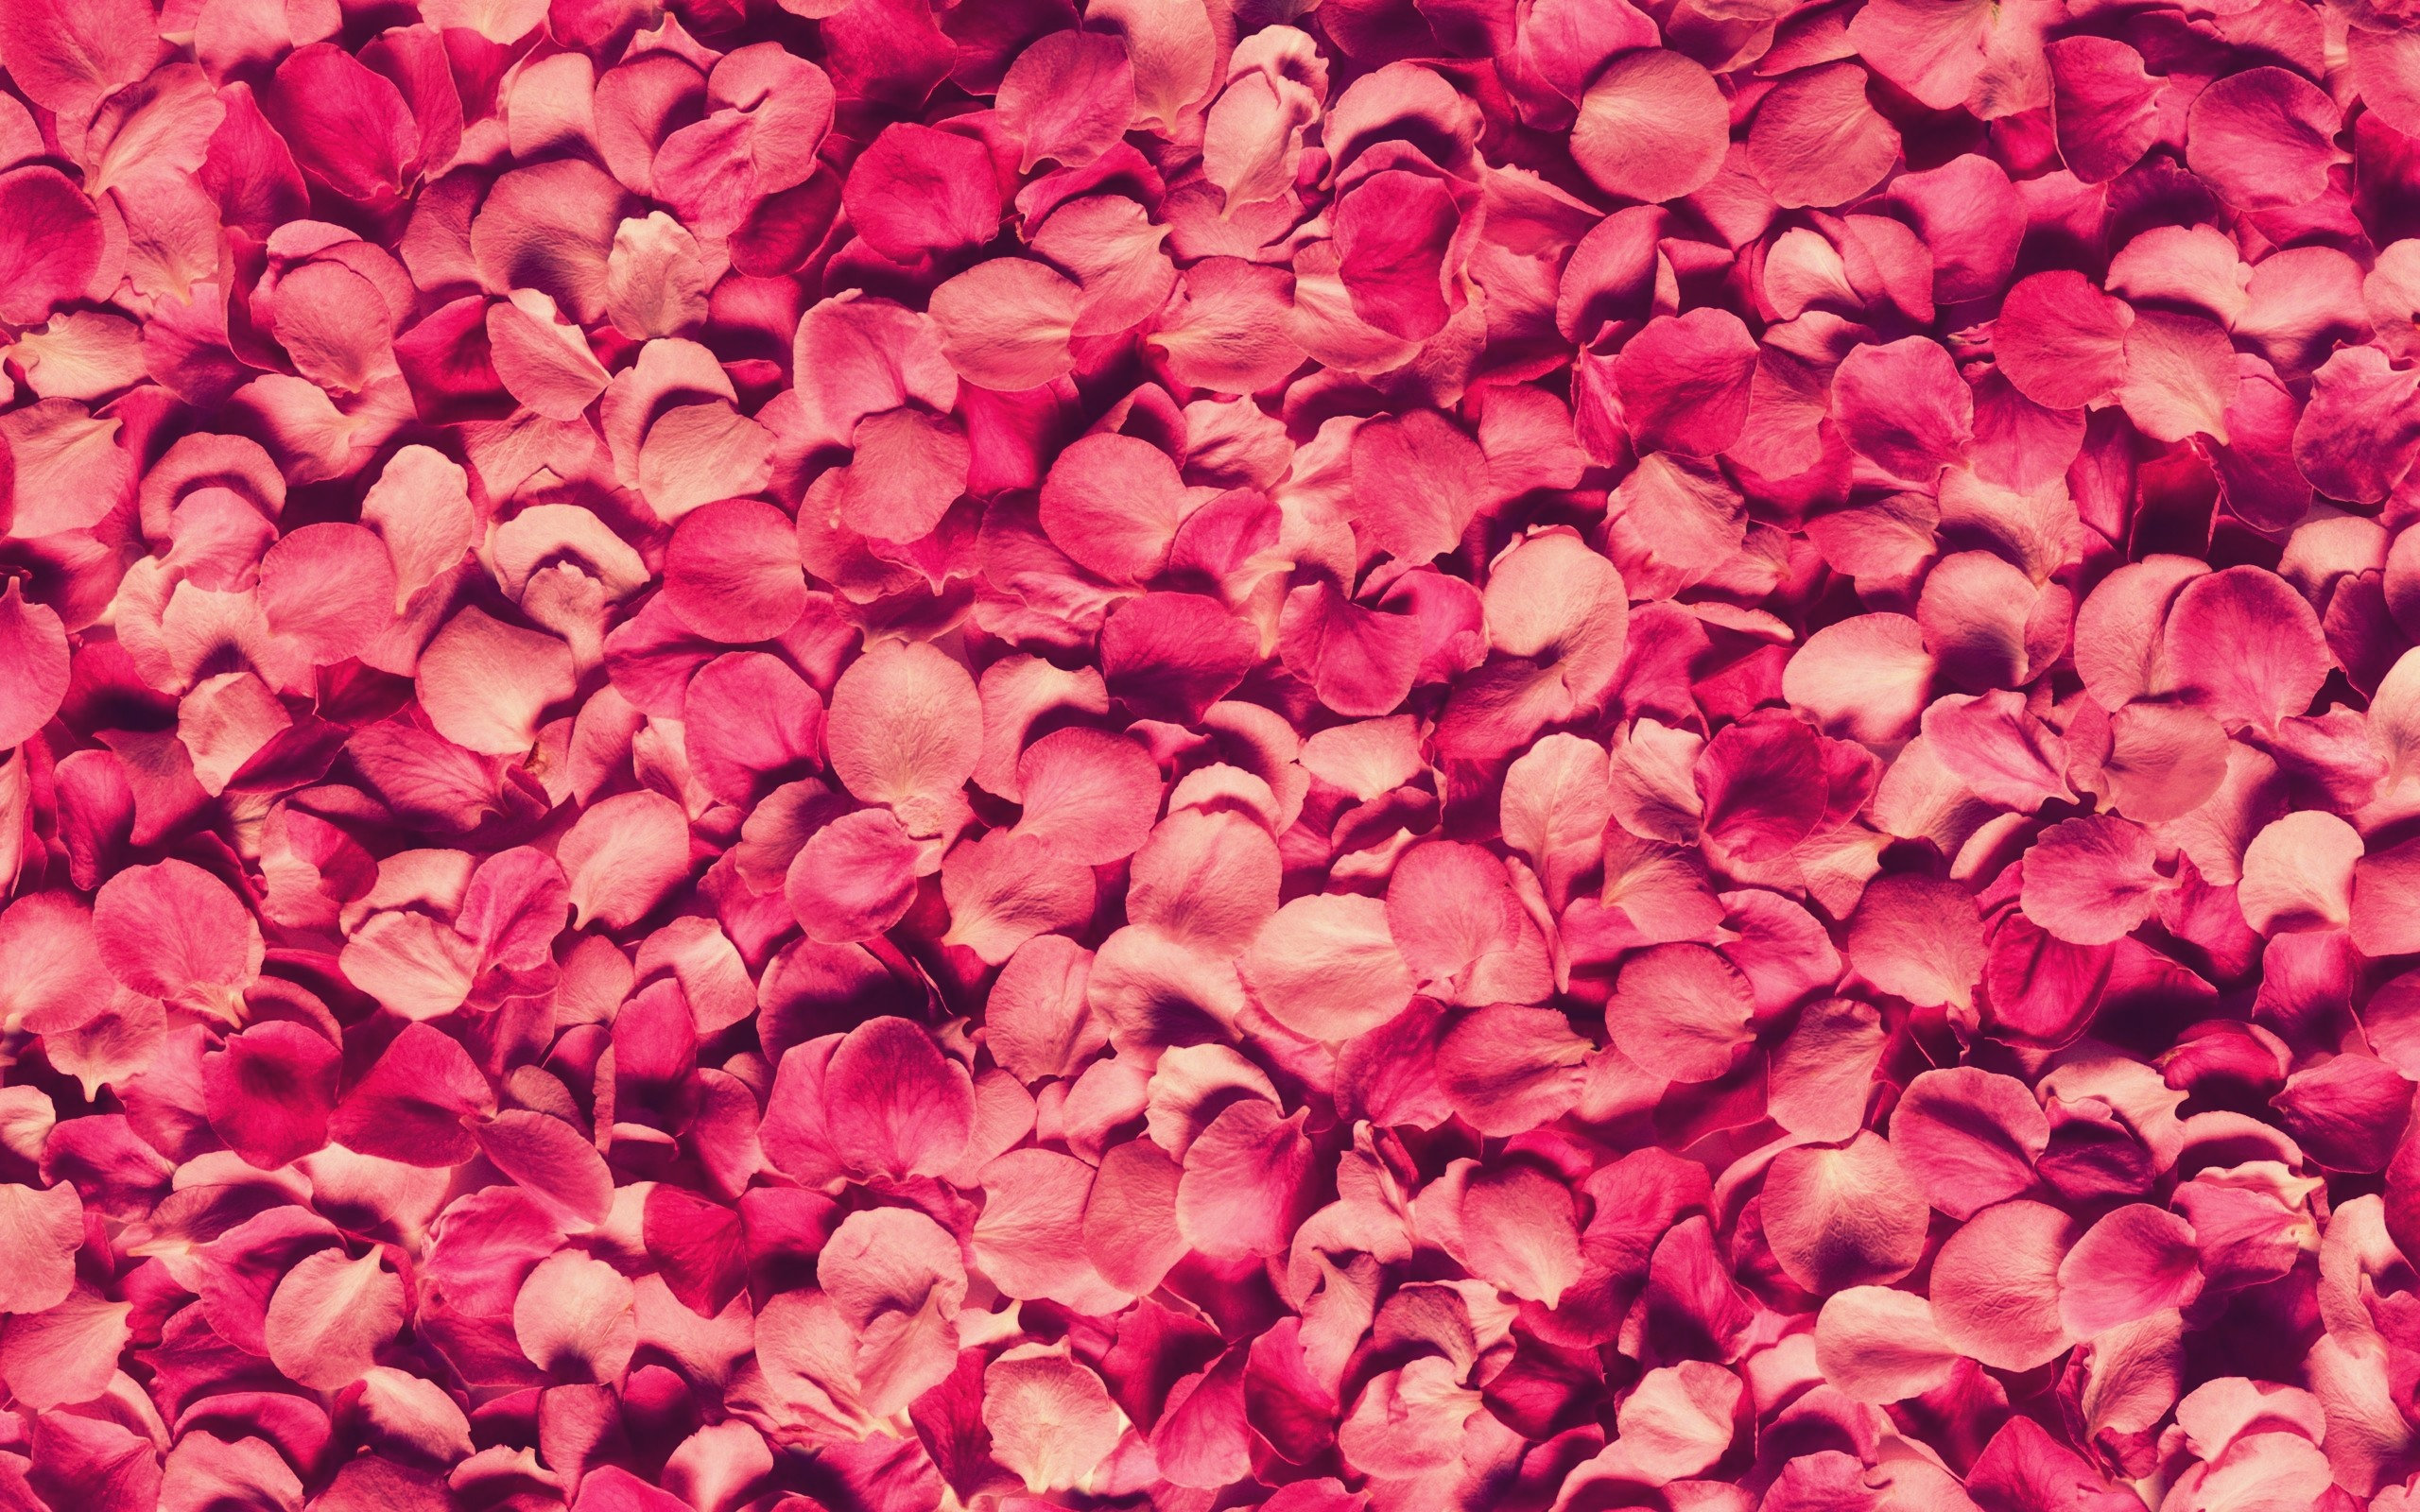 Pink Rose Petals, High Definition, High Quality, Widescreen